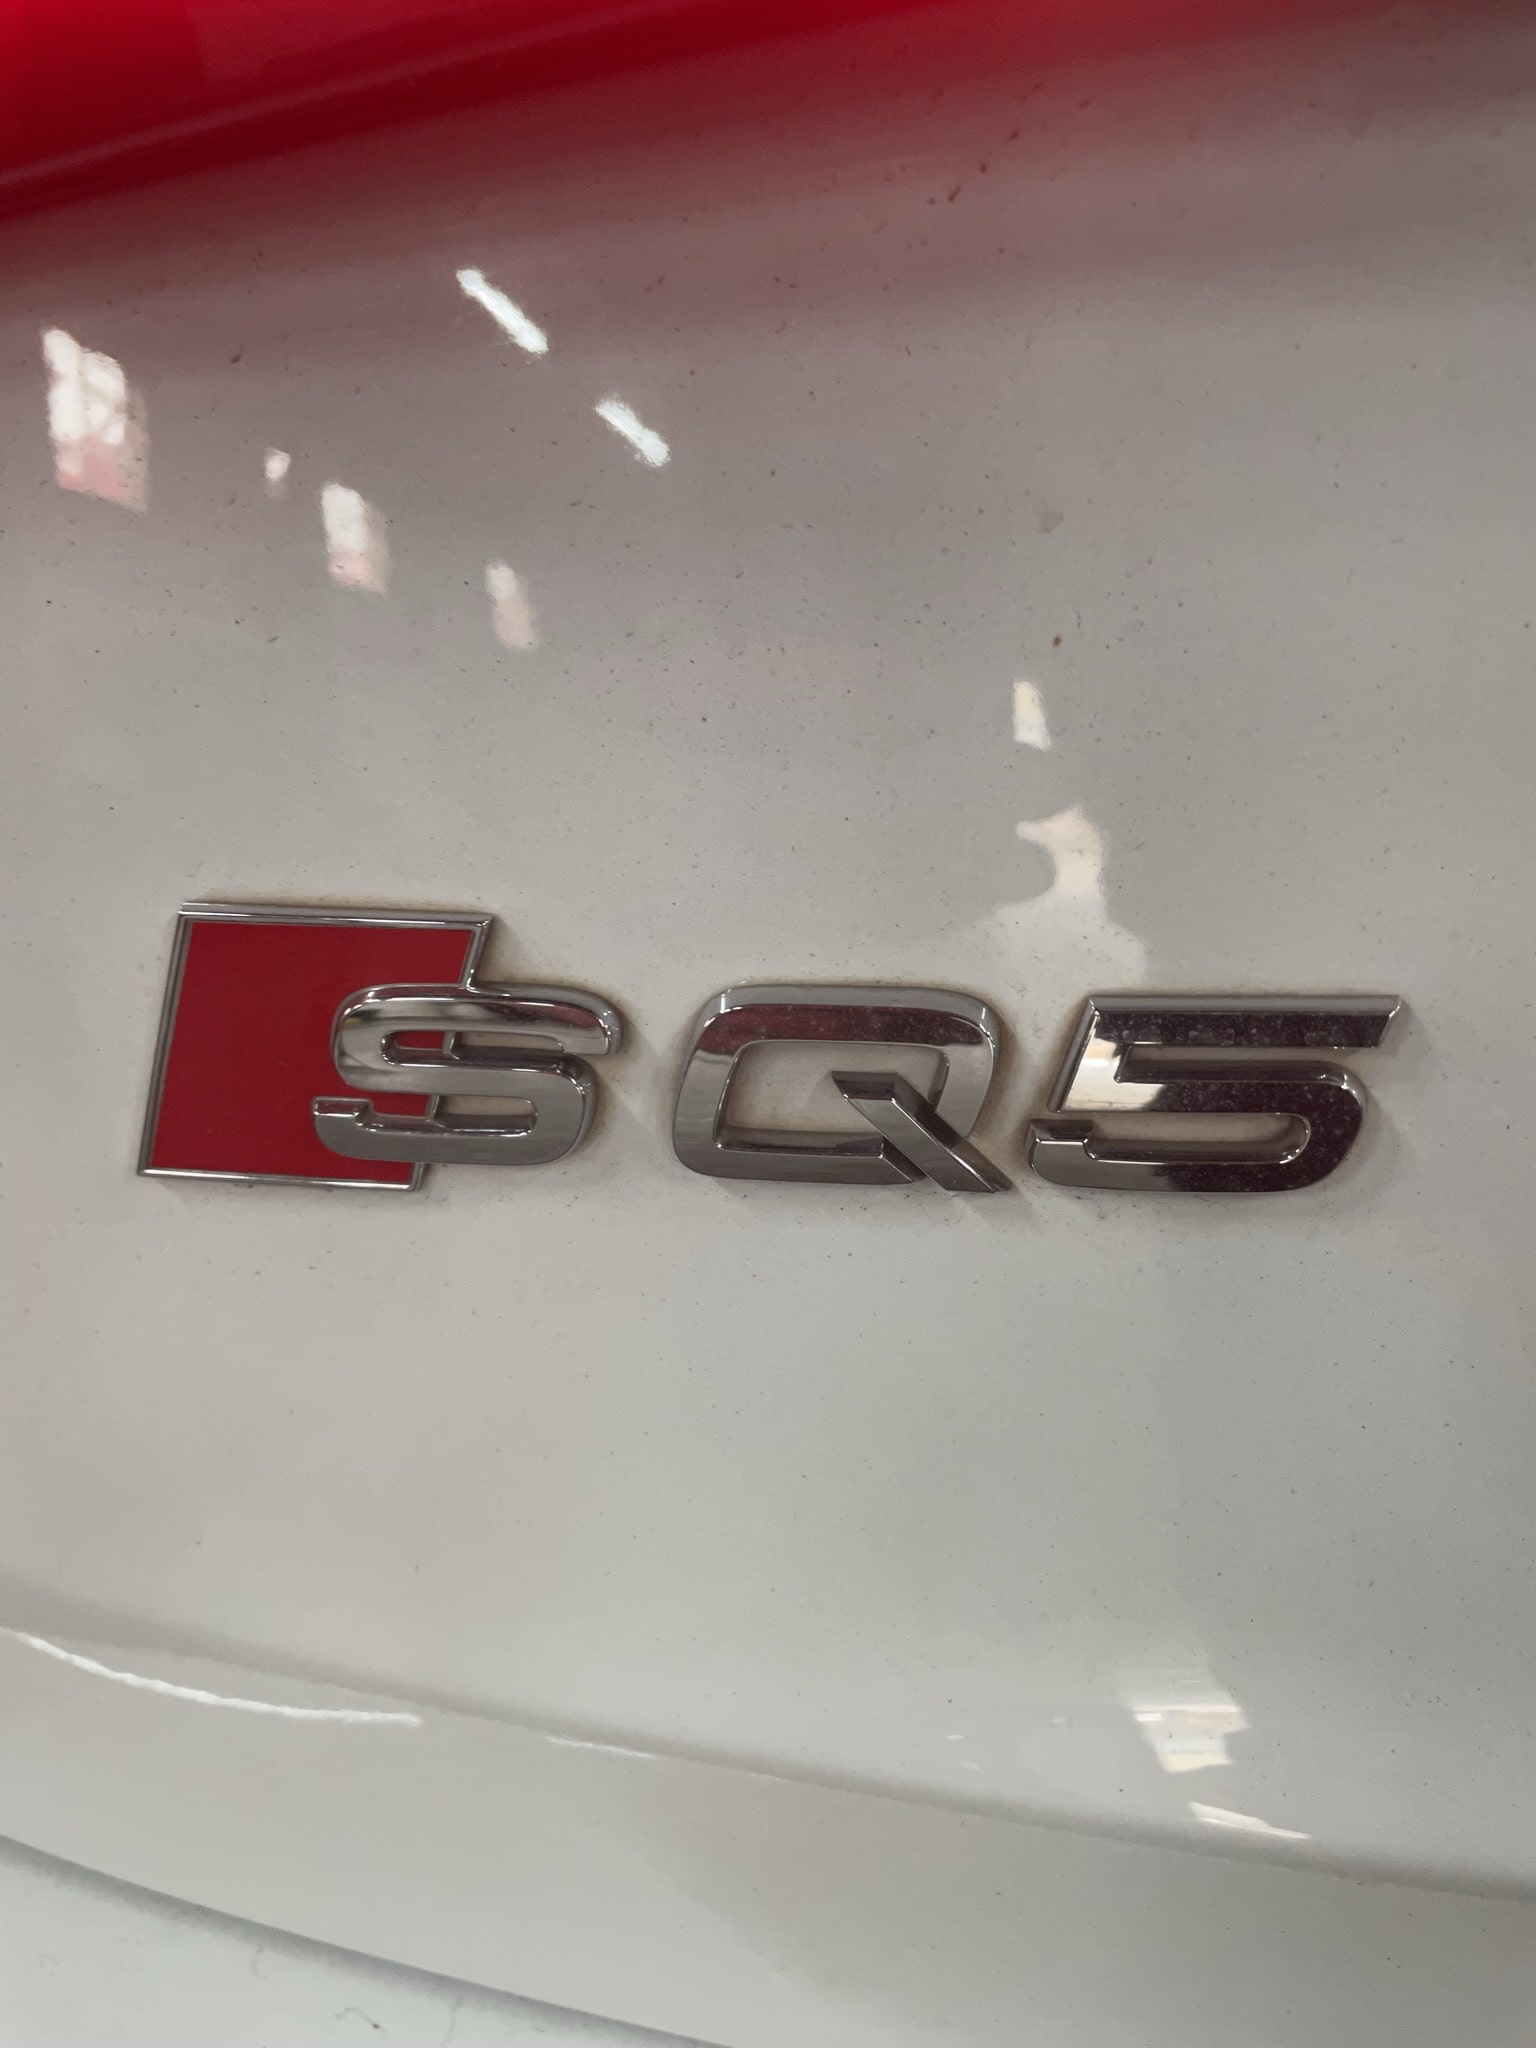 Audi SQ5 cold start issue